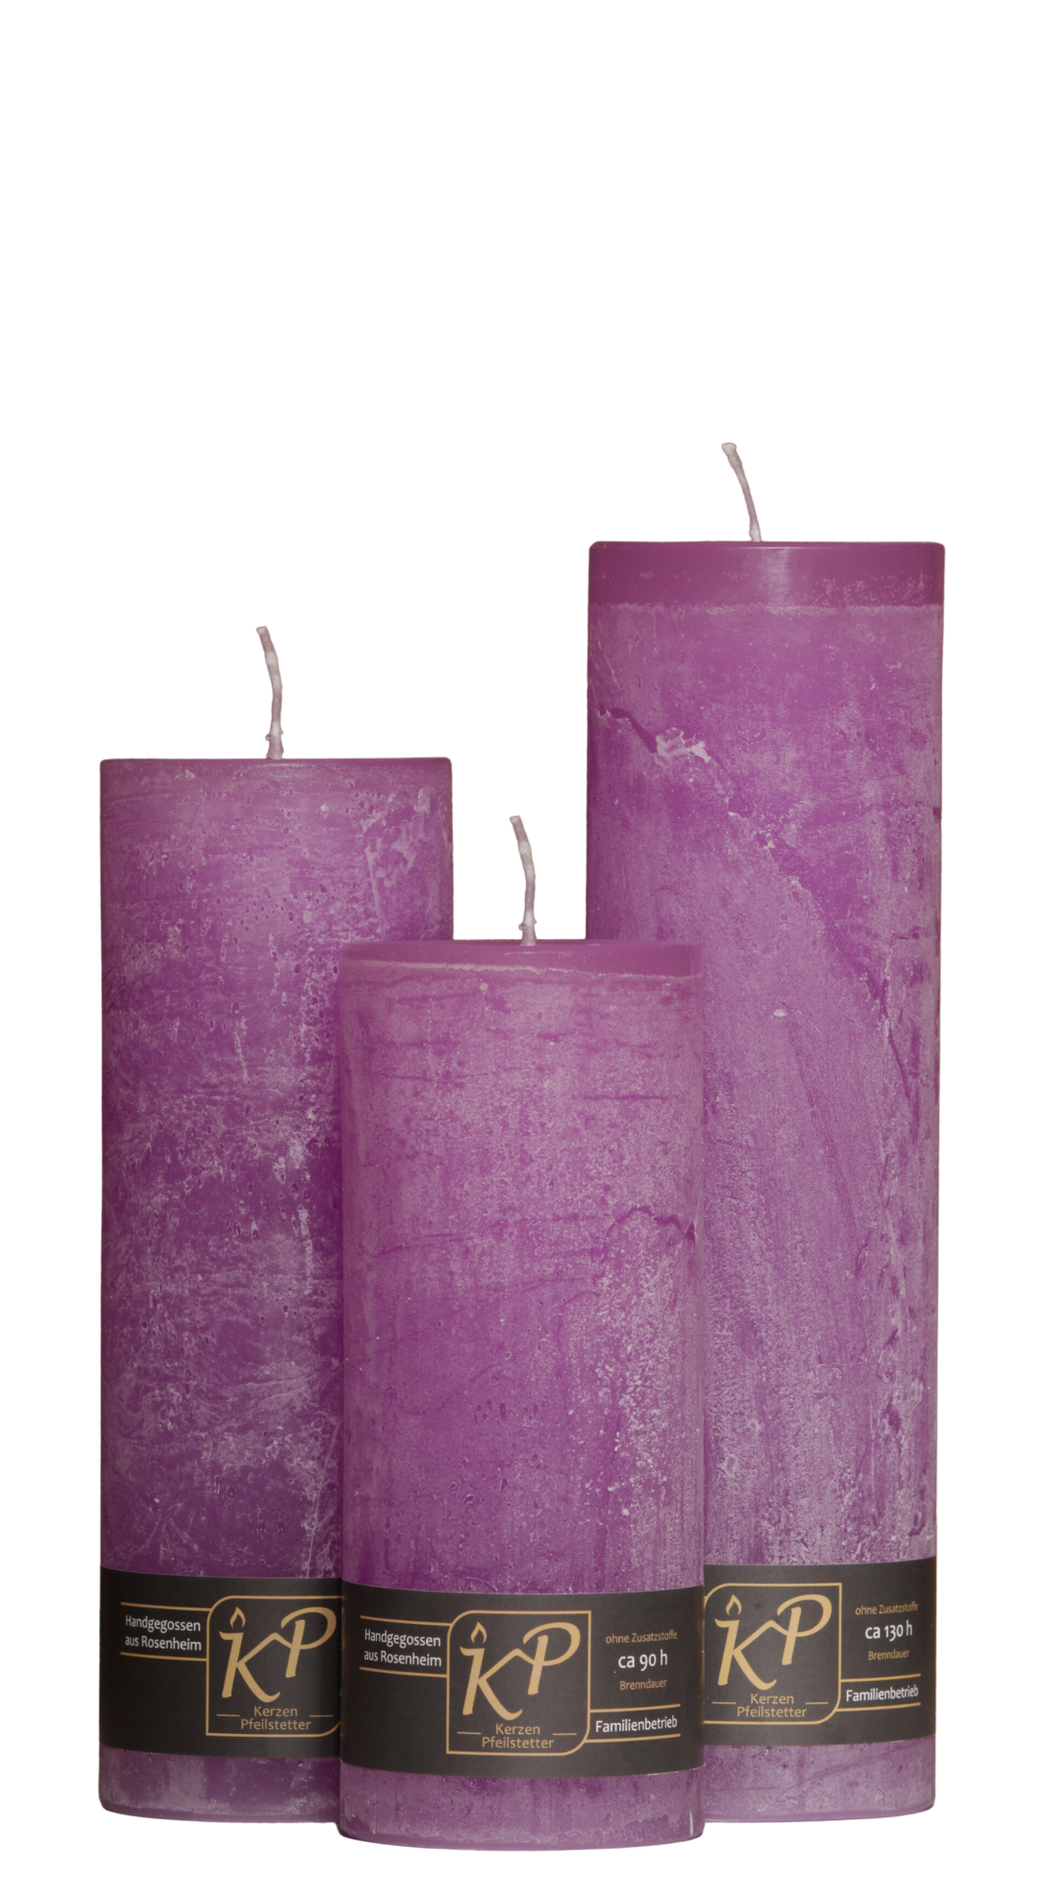 Dalina flower candle | light purple | ~ 130h burning time